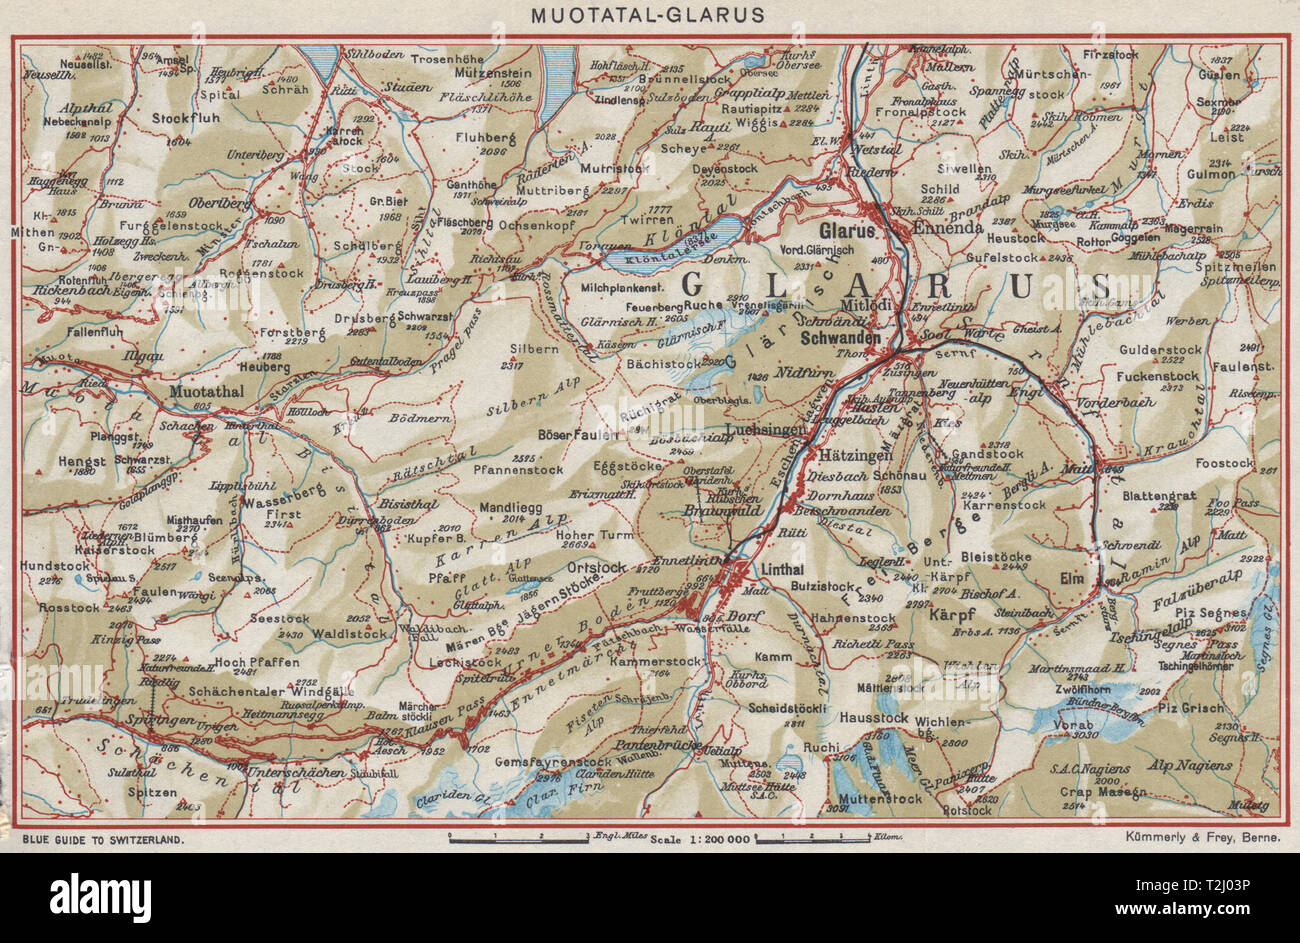 MUOTATAL-GLARUS. Elm Bruanwald Schwanden. Vintage map plan. Switzerland 1948 Stock Photo